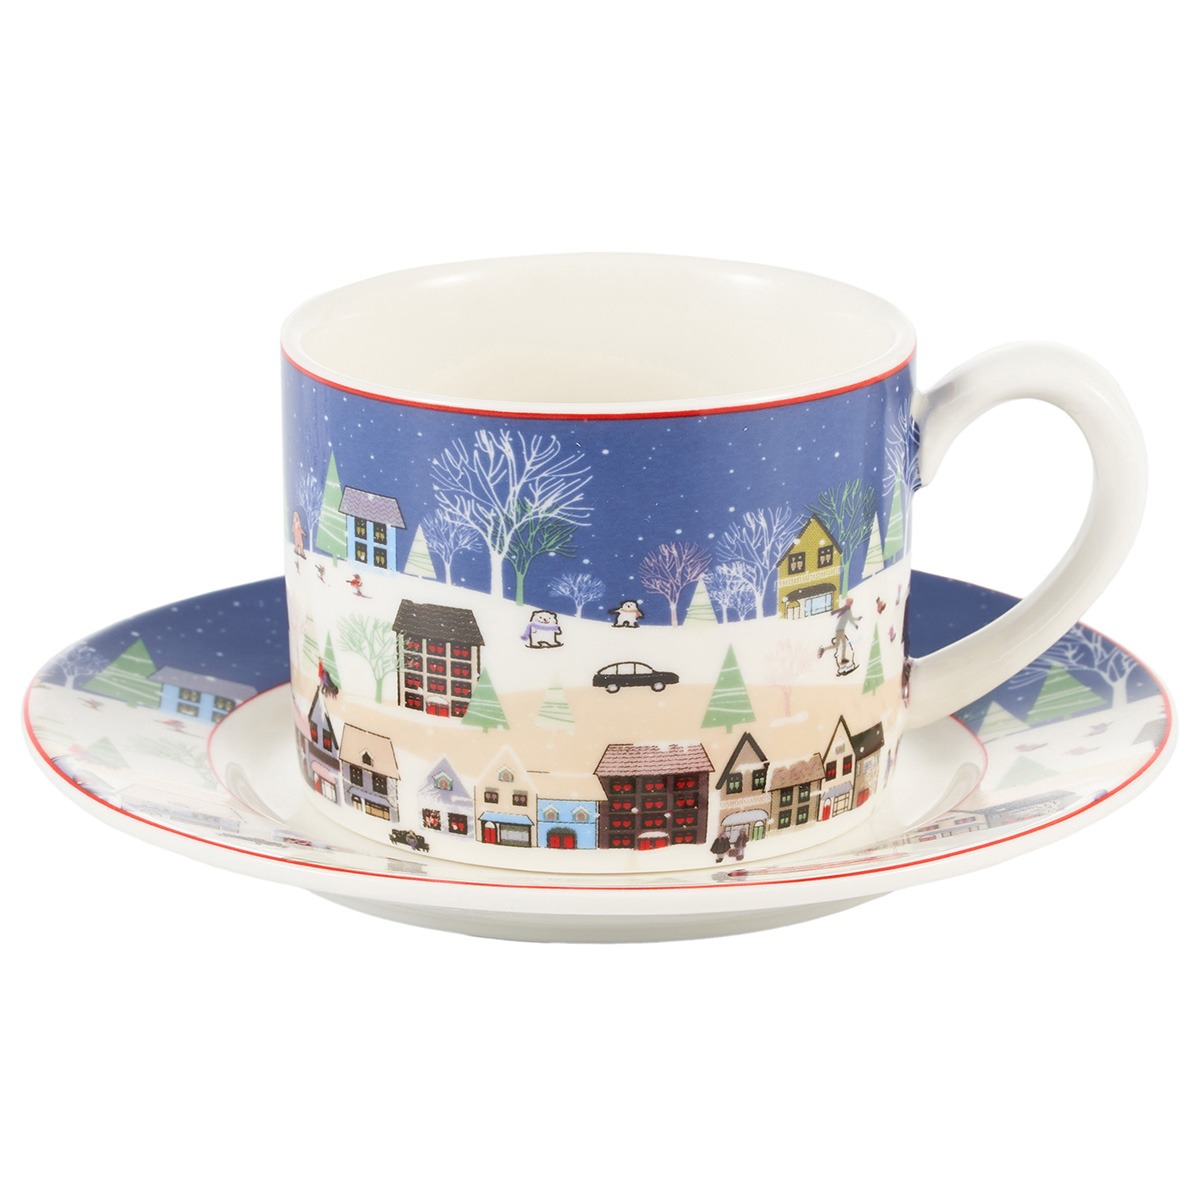 Чайная пара Gipfel Christmas фарфор синий чашка 250 мл, блюдце 14 см пара кофейная чашка блюдце 230 мл tudor tuc1062 4